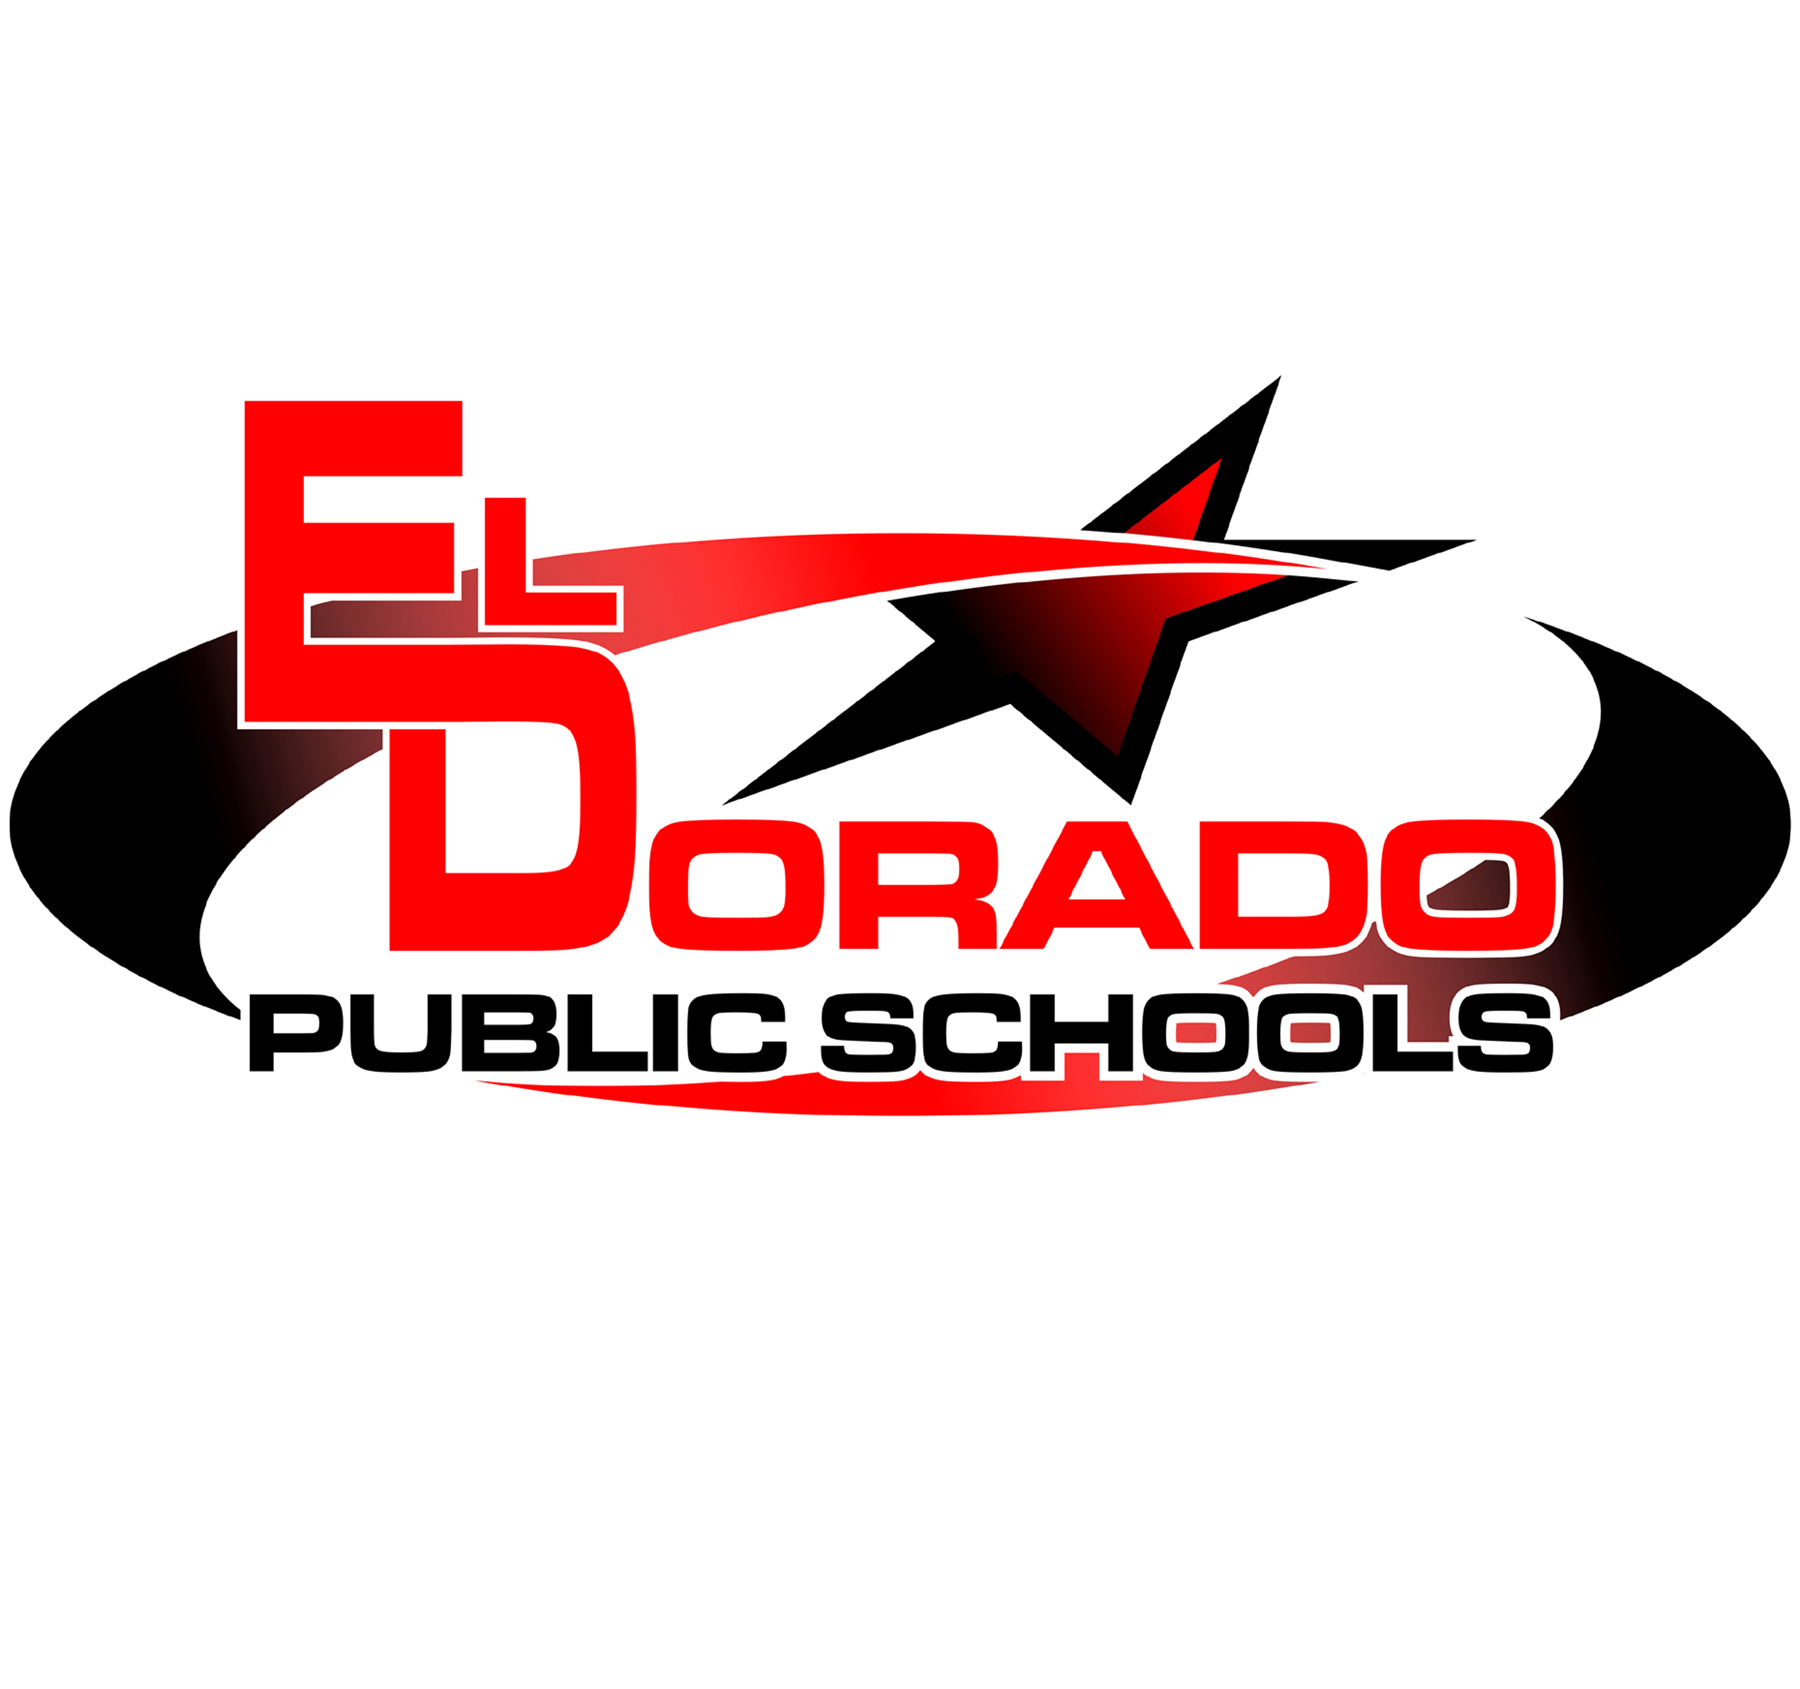 USD 490 logo red text "El Dorado" black text "Public Schools" with a black oval and red/black star